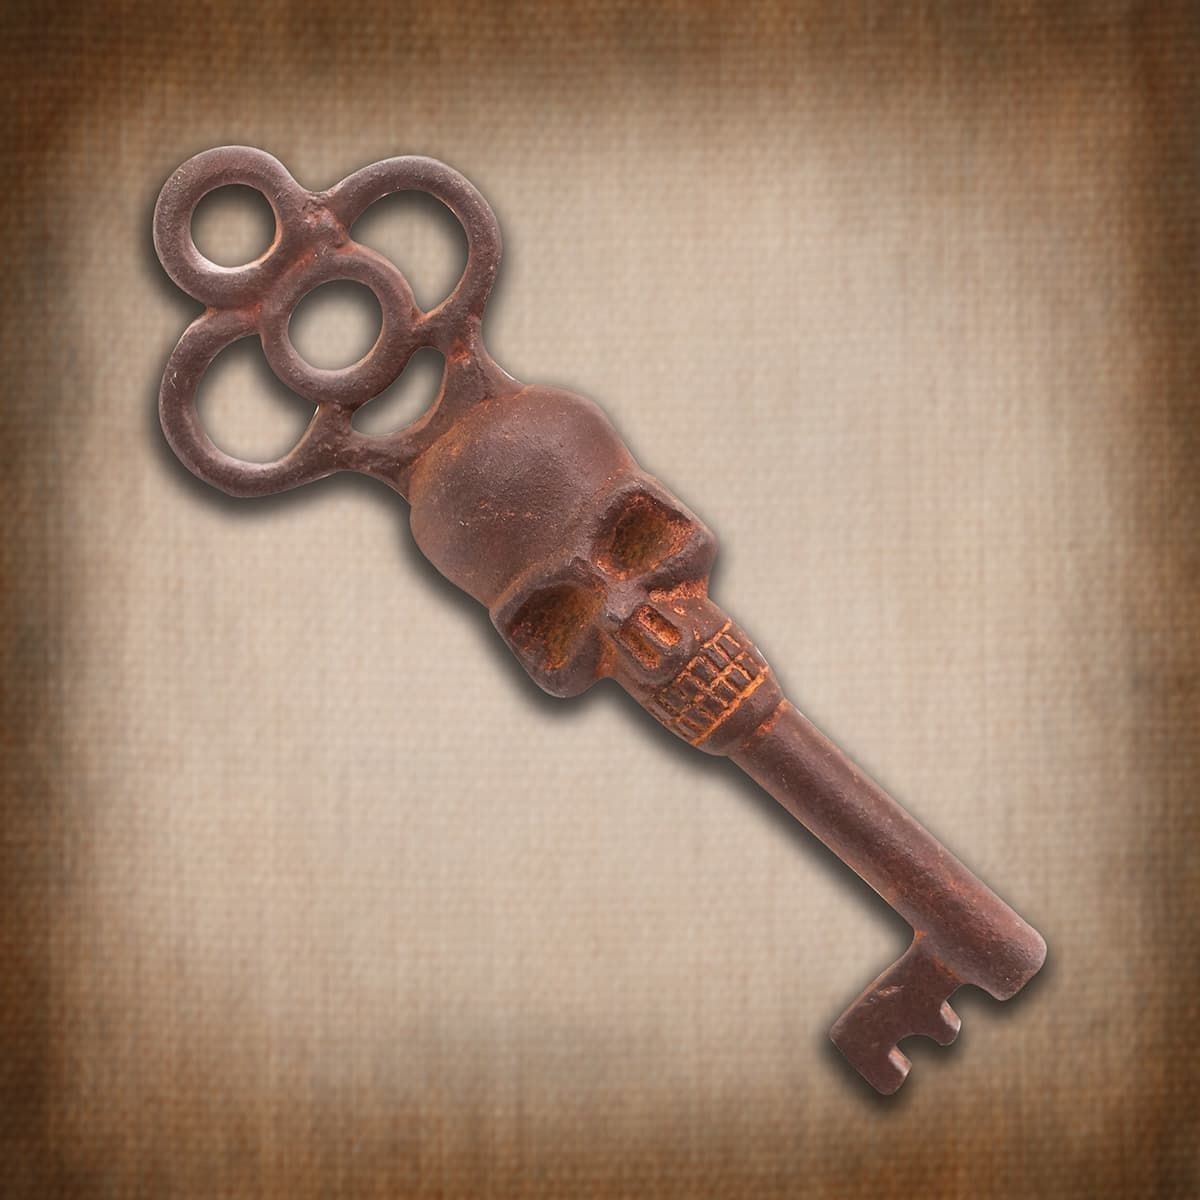 The Key…